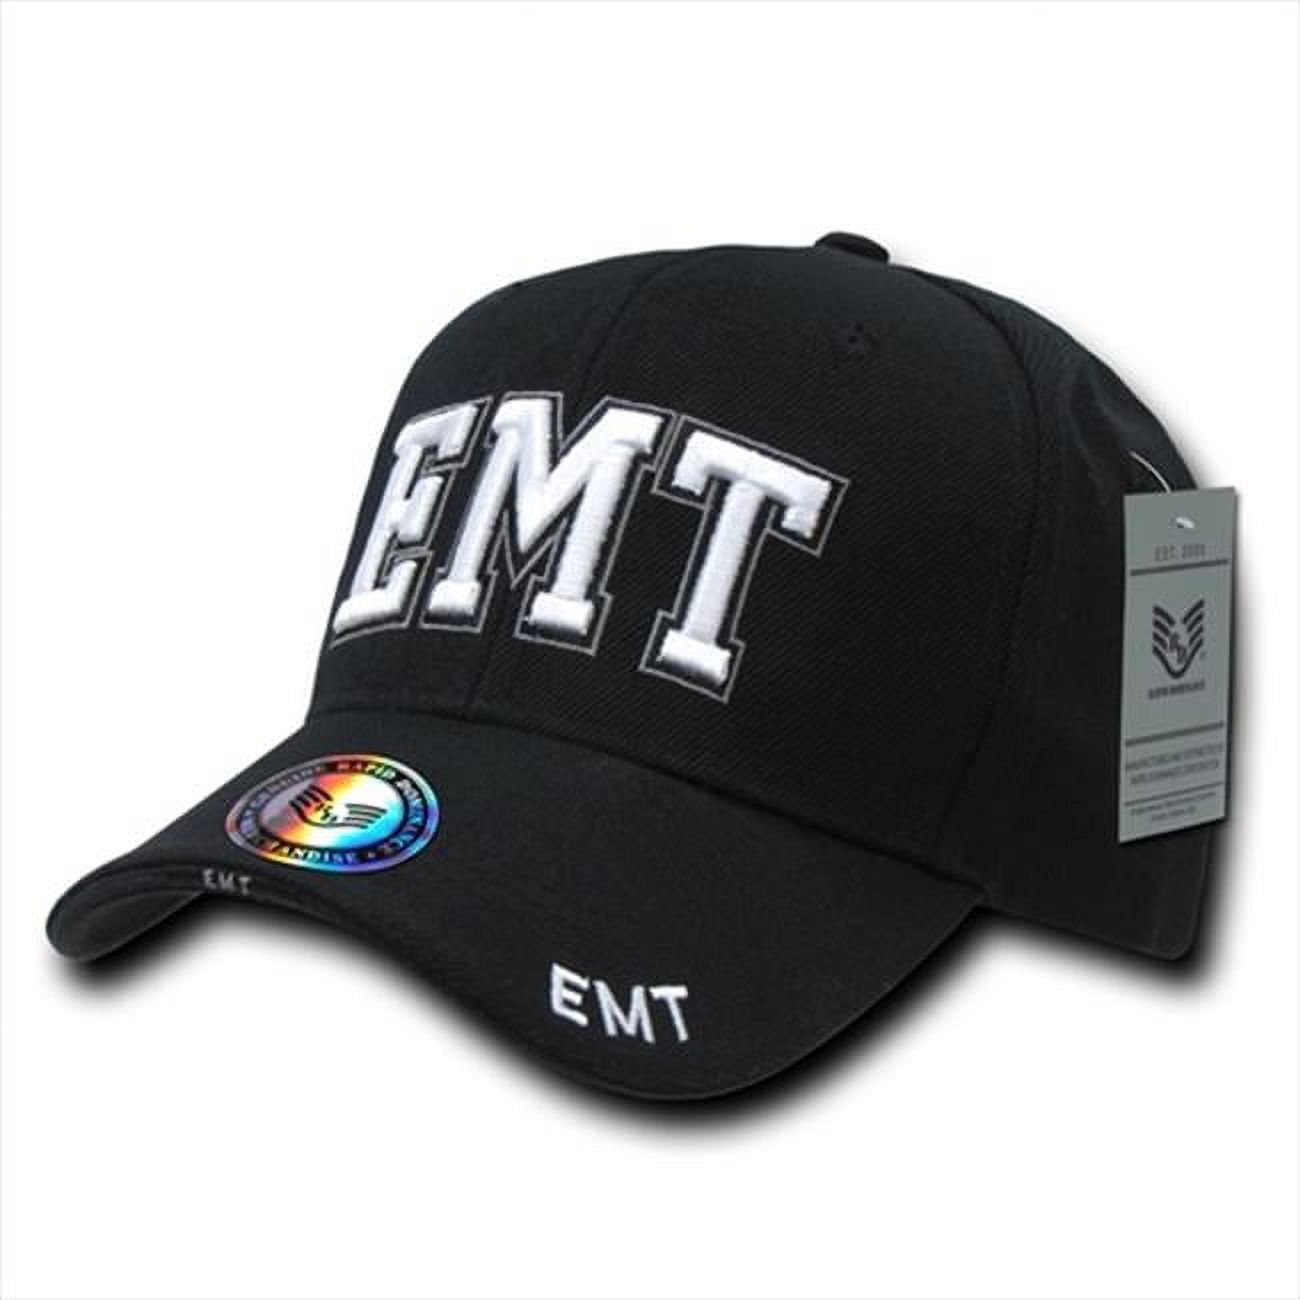 DeLuxe Law Enf. Caps, EMT, Black - image 1 of 2